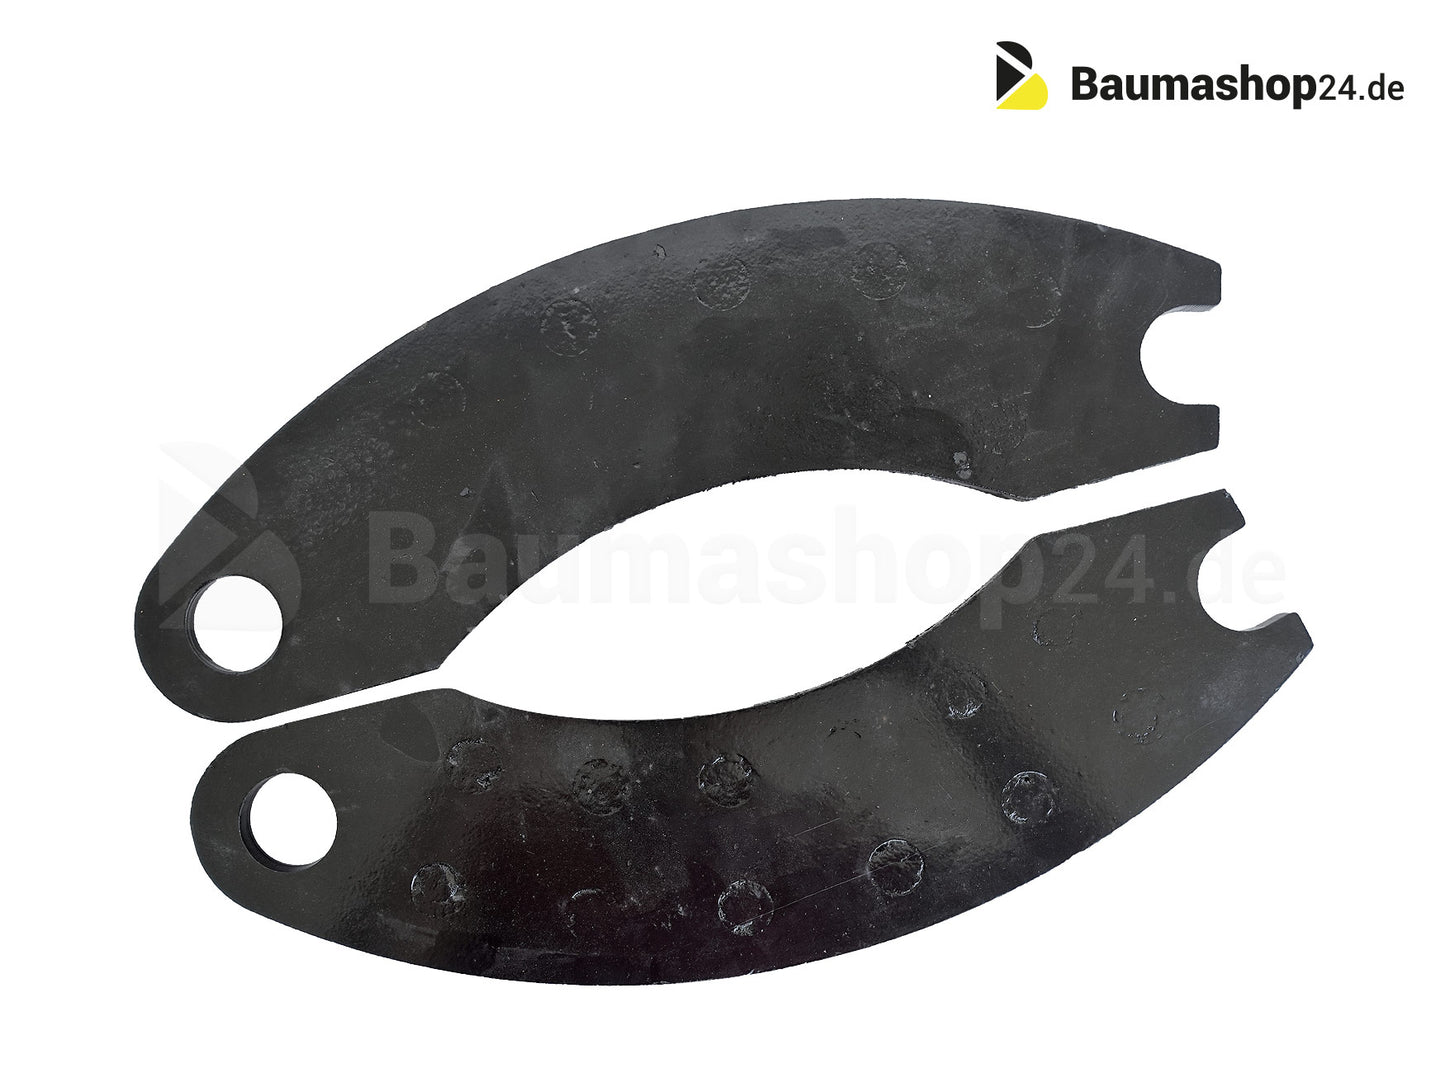 Caterpillar brake pads 114-9297 suitable for dumpers